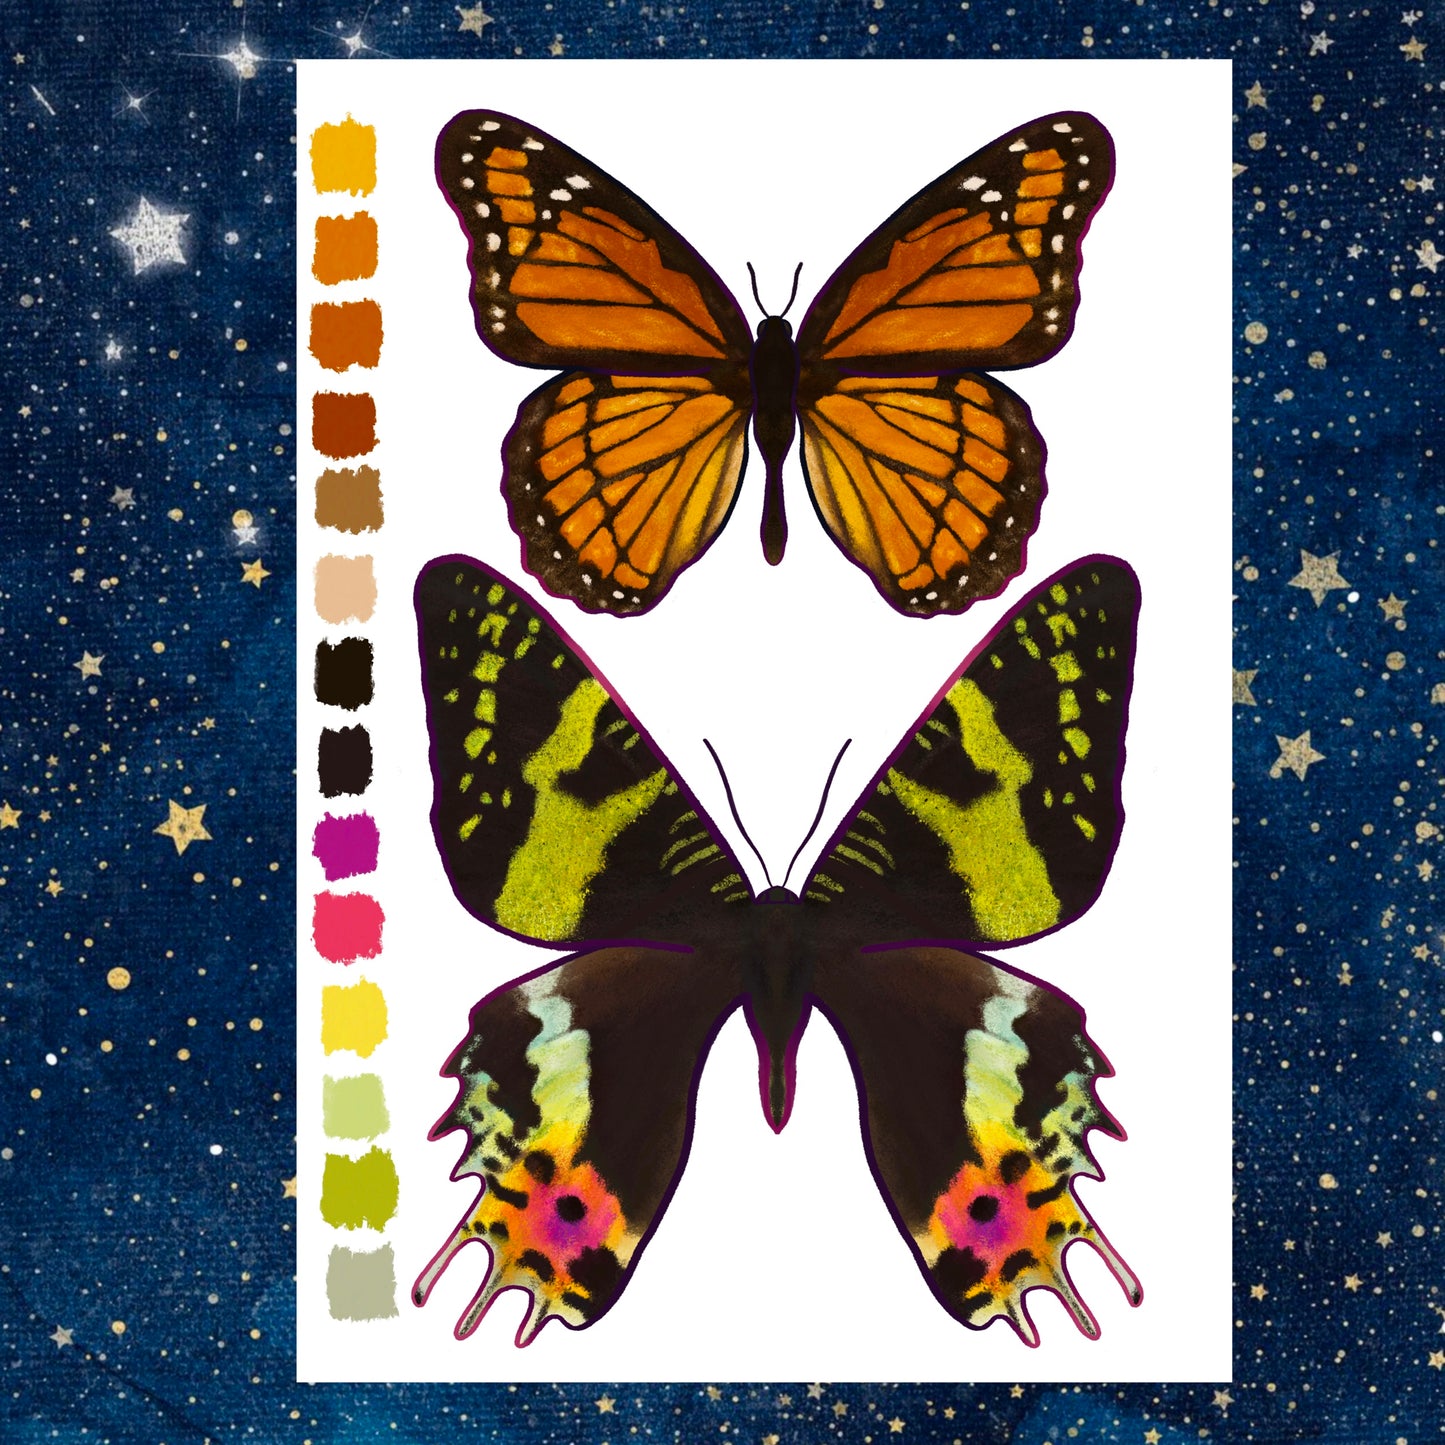 Digital Sketchbook 5x7 Print Butterfly + Moth Illustration